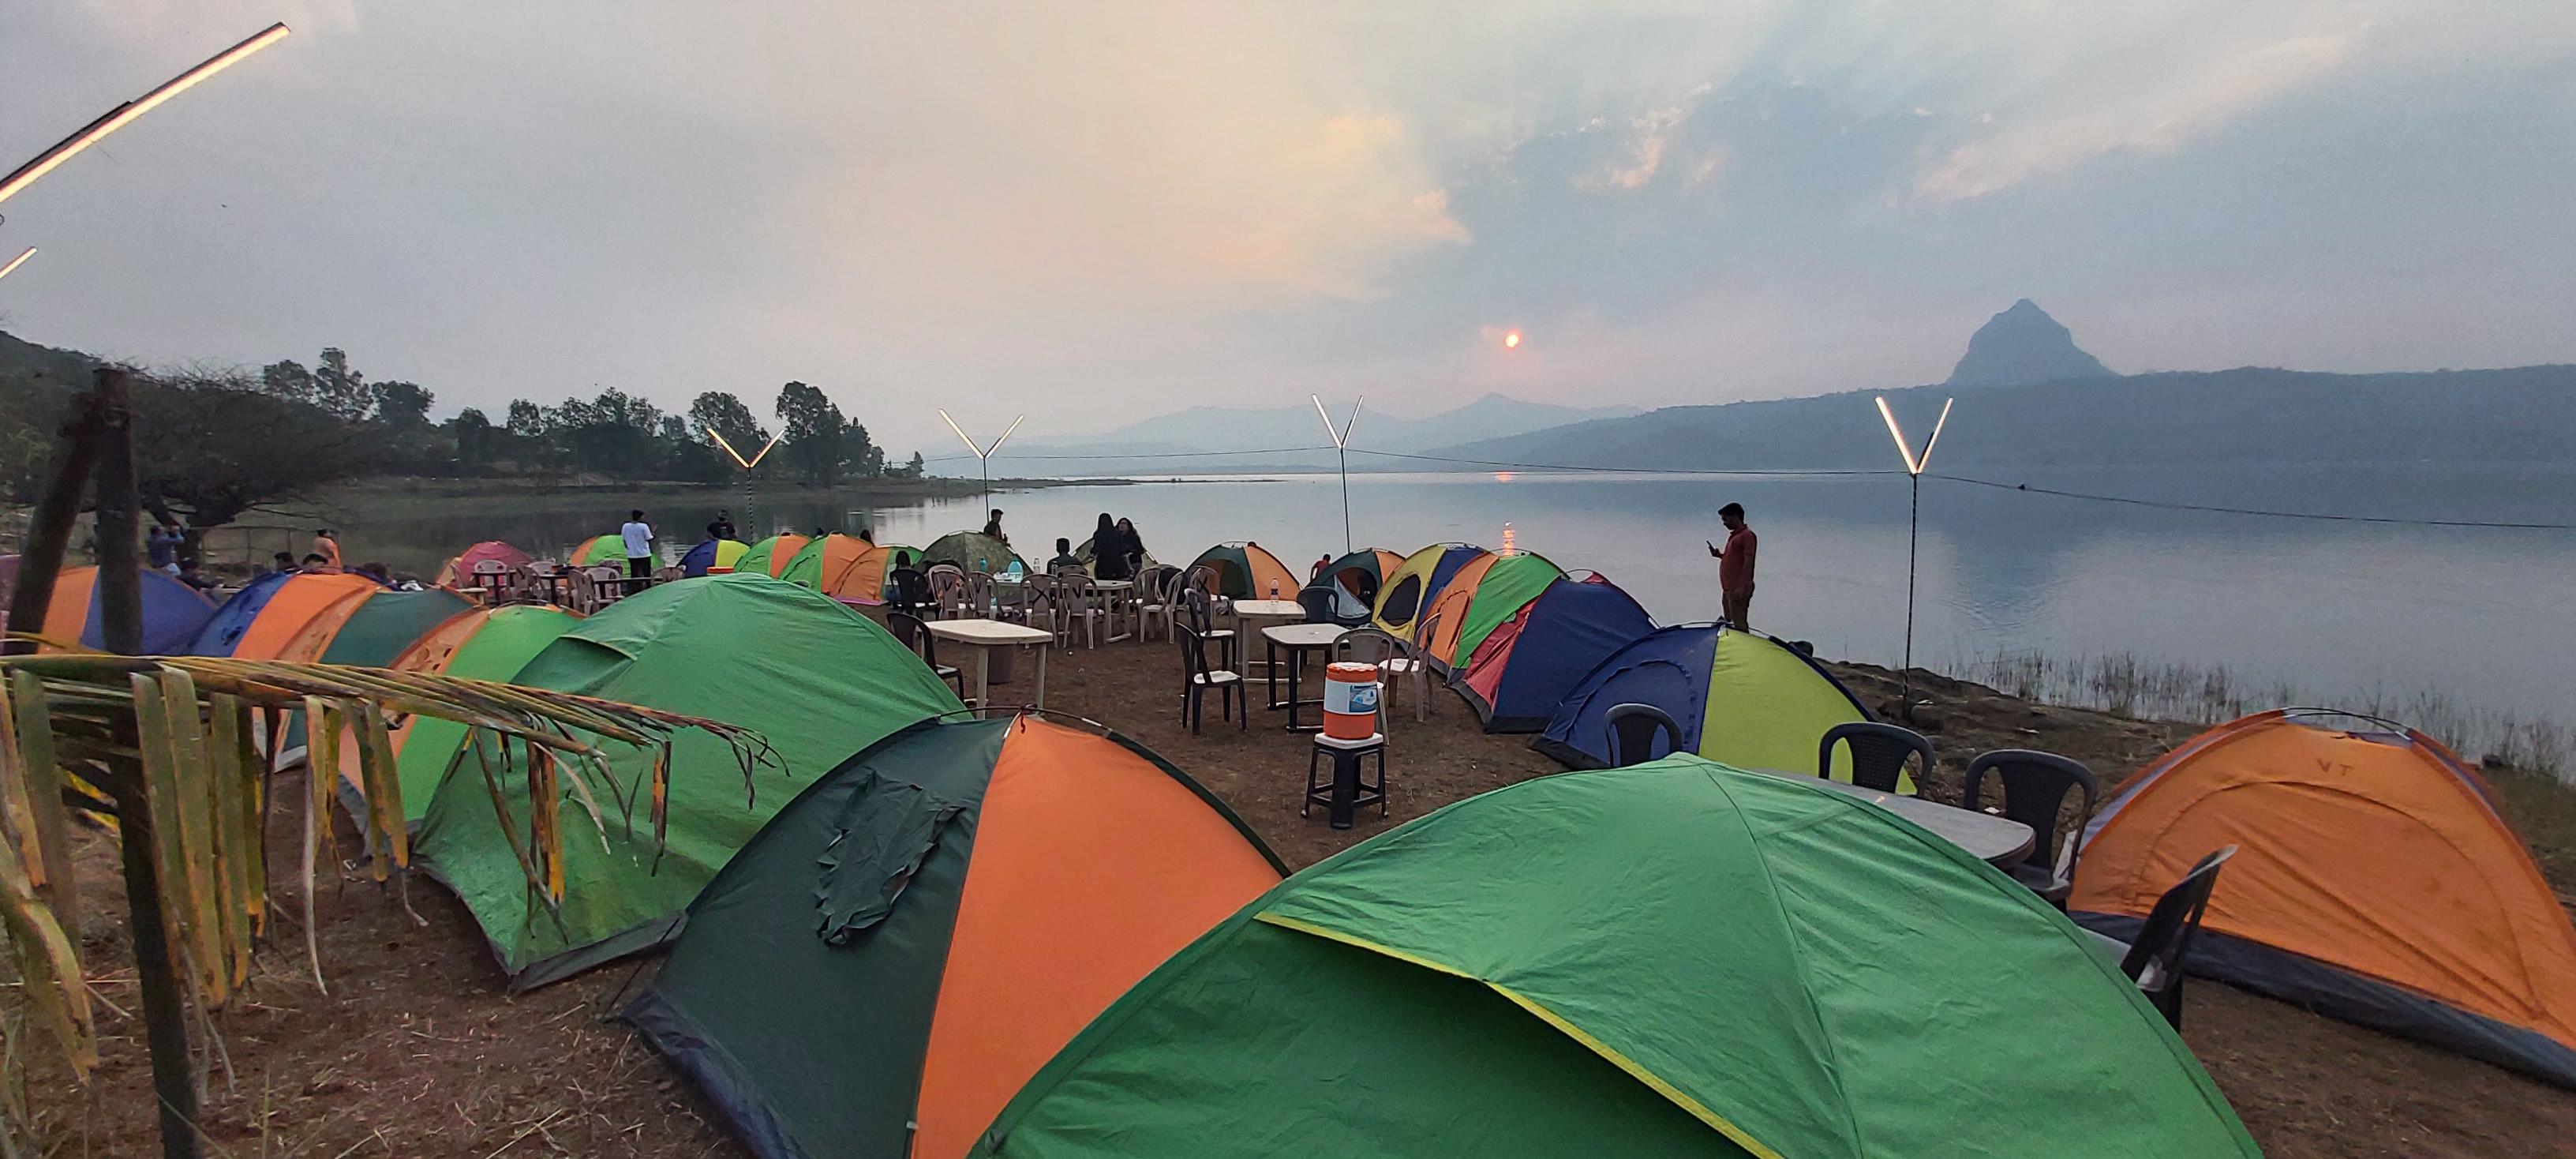 Pawna lake camping with boating 